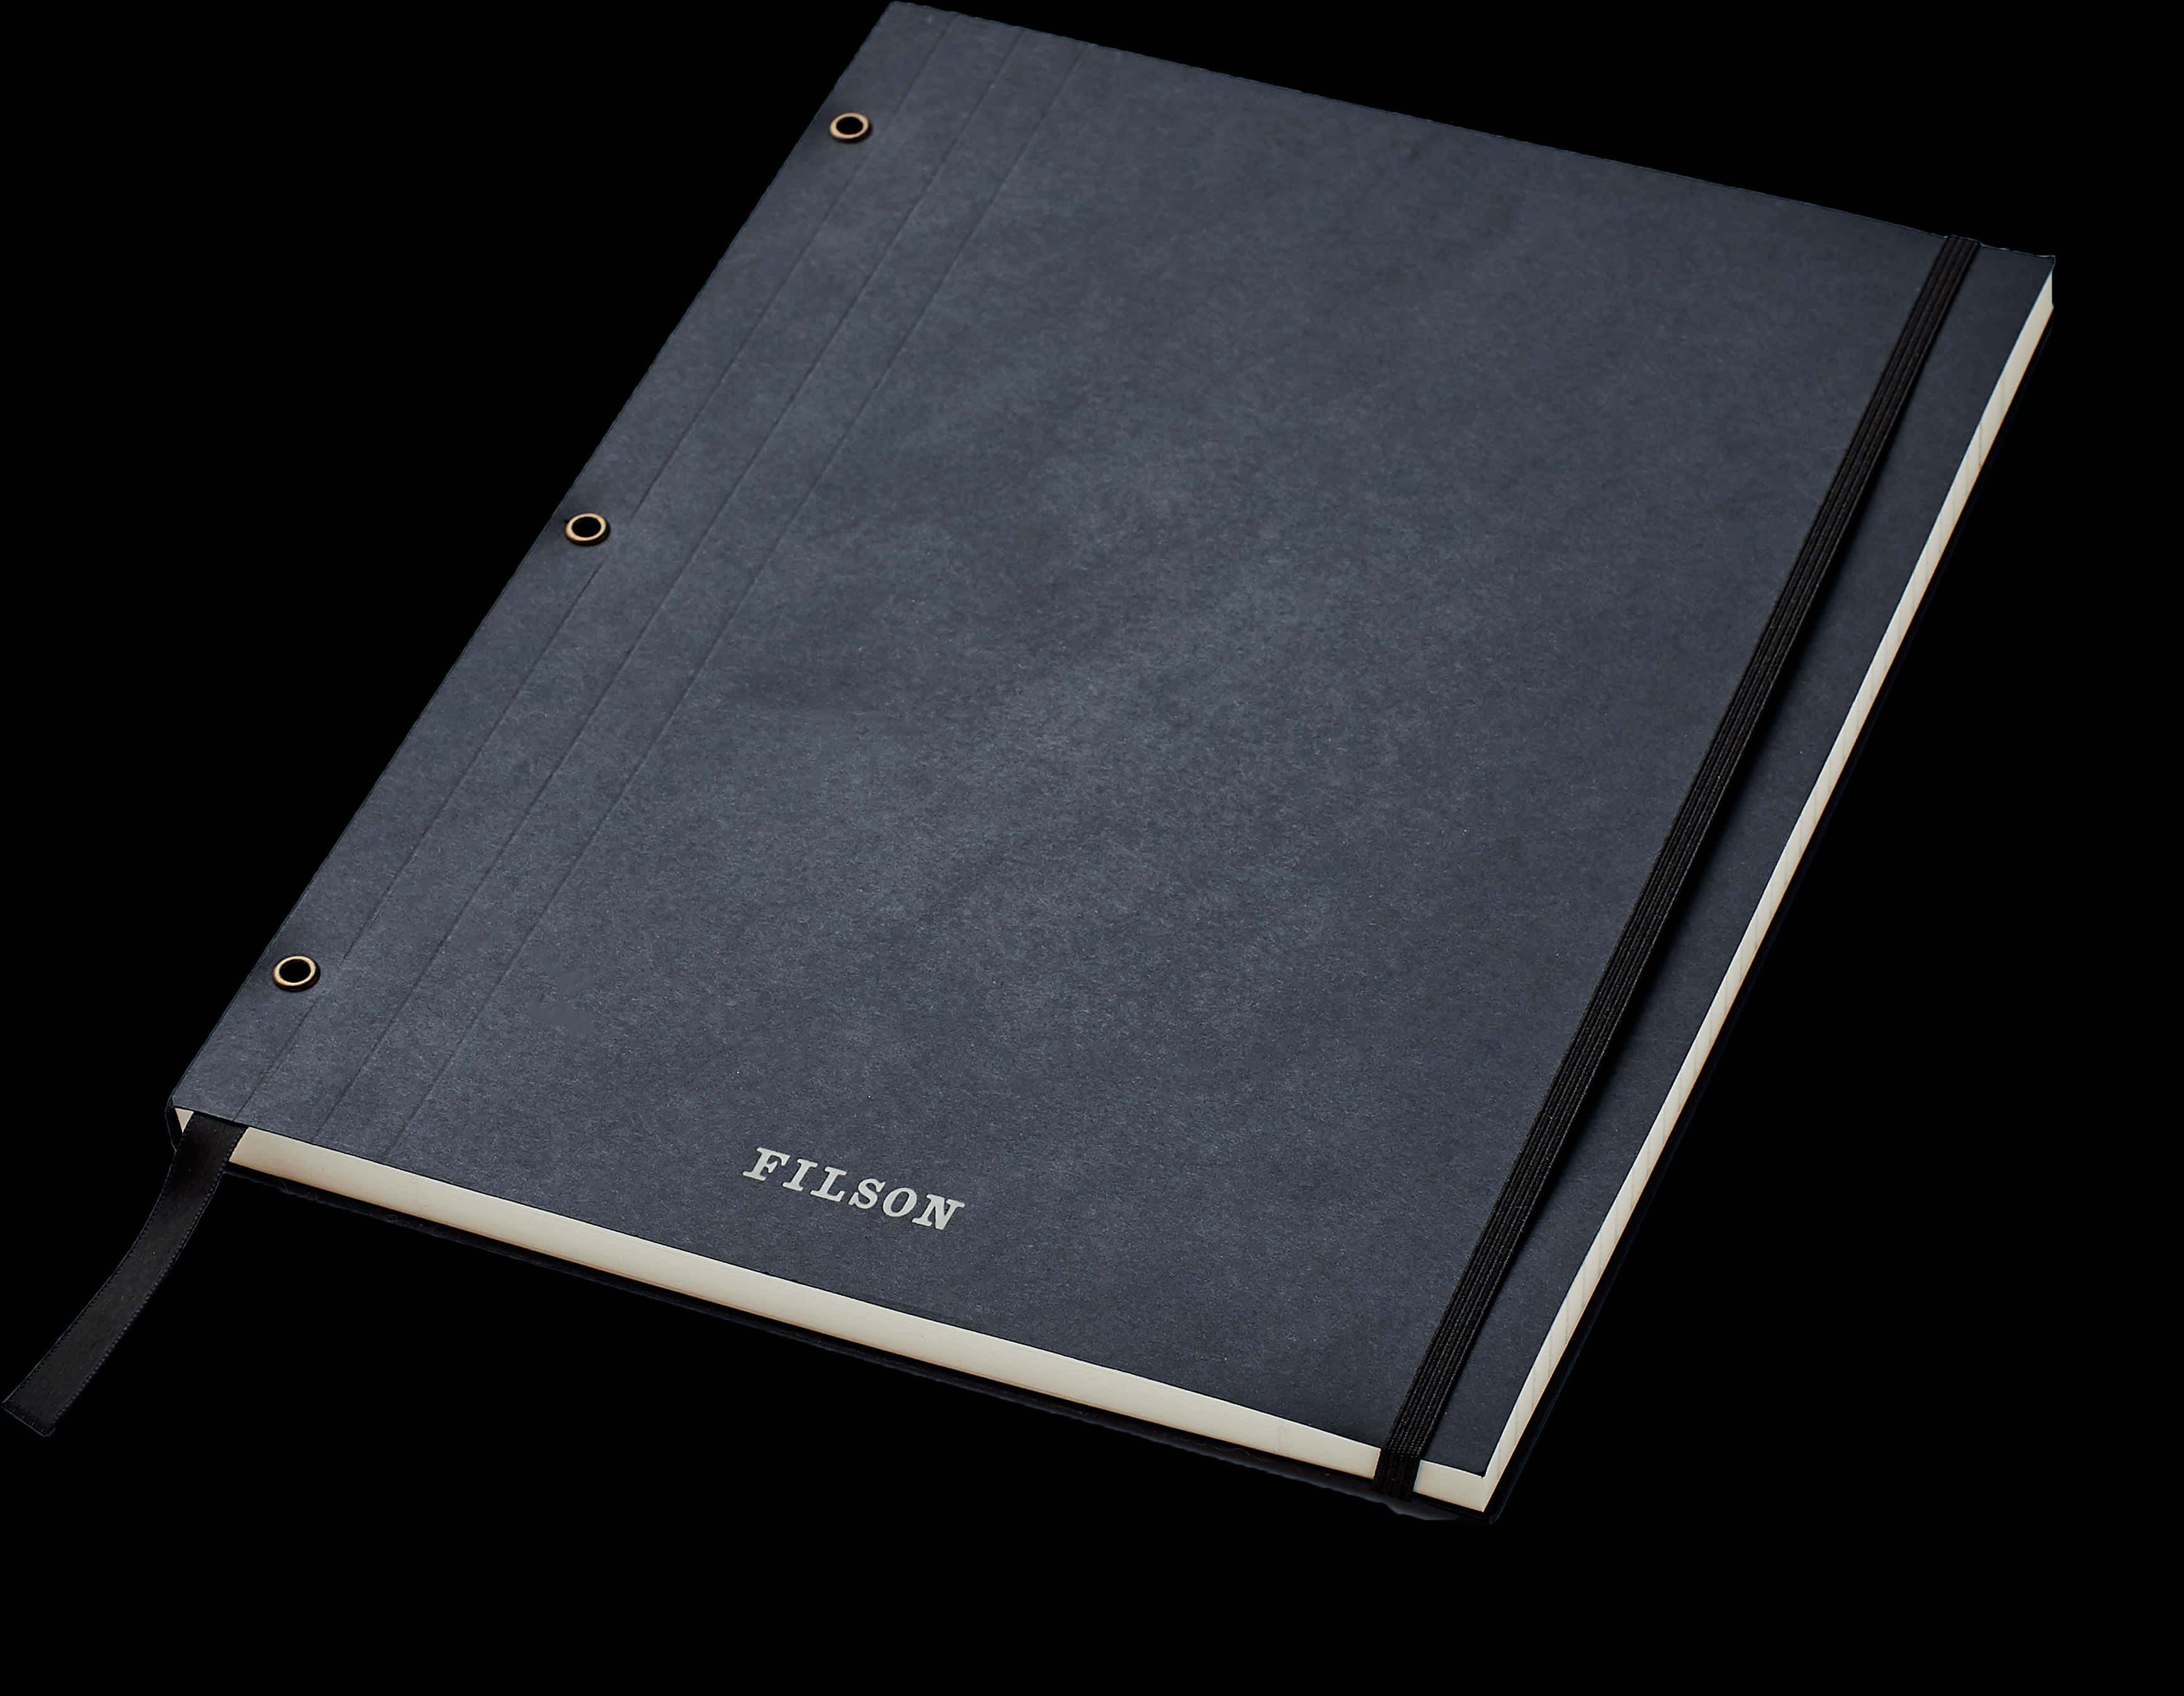 A Blue Folder With A Black Band